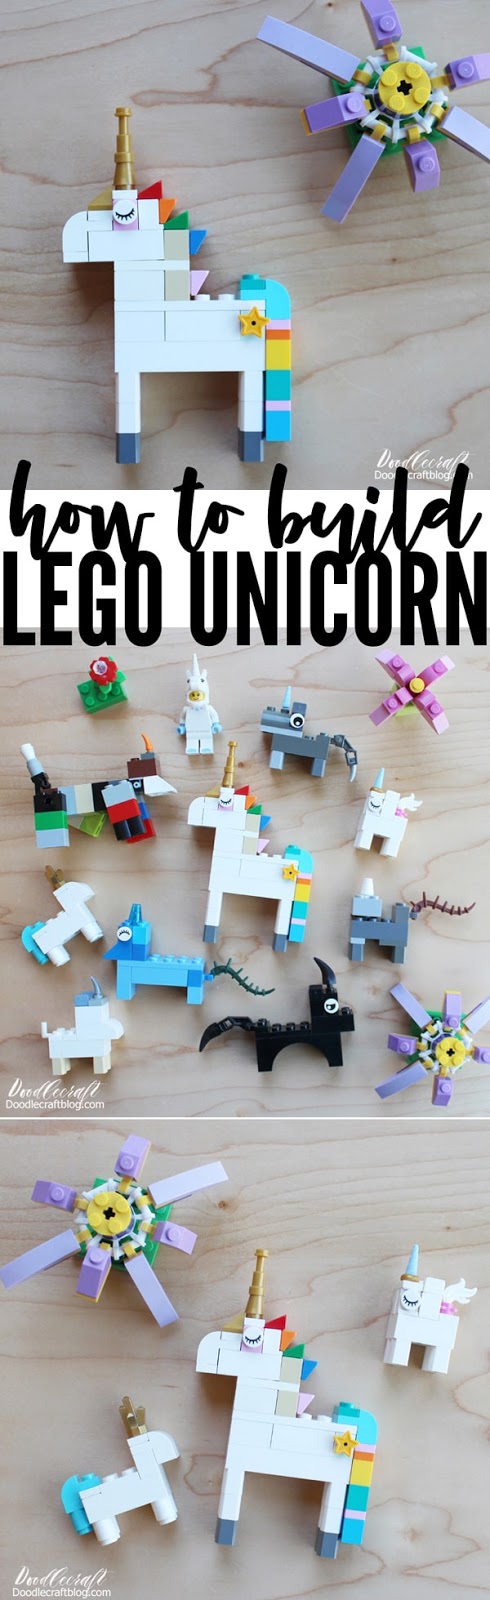 How To Build Lego Unicorn Instructions 10 Ways - 10 best kawaii kunicorm images kawaii minecraft play roblox